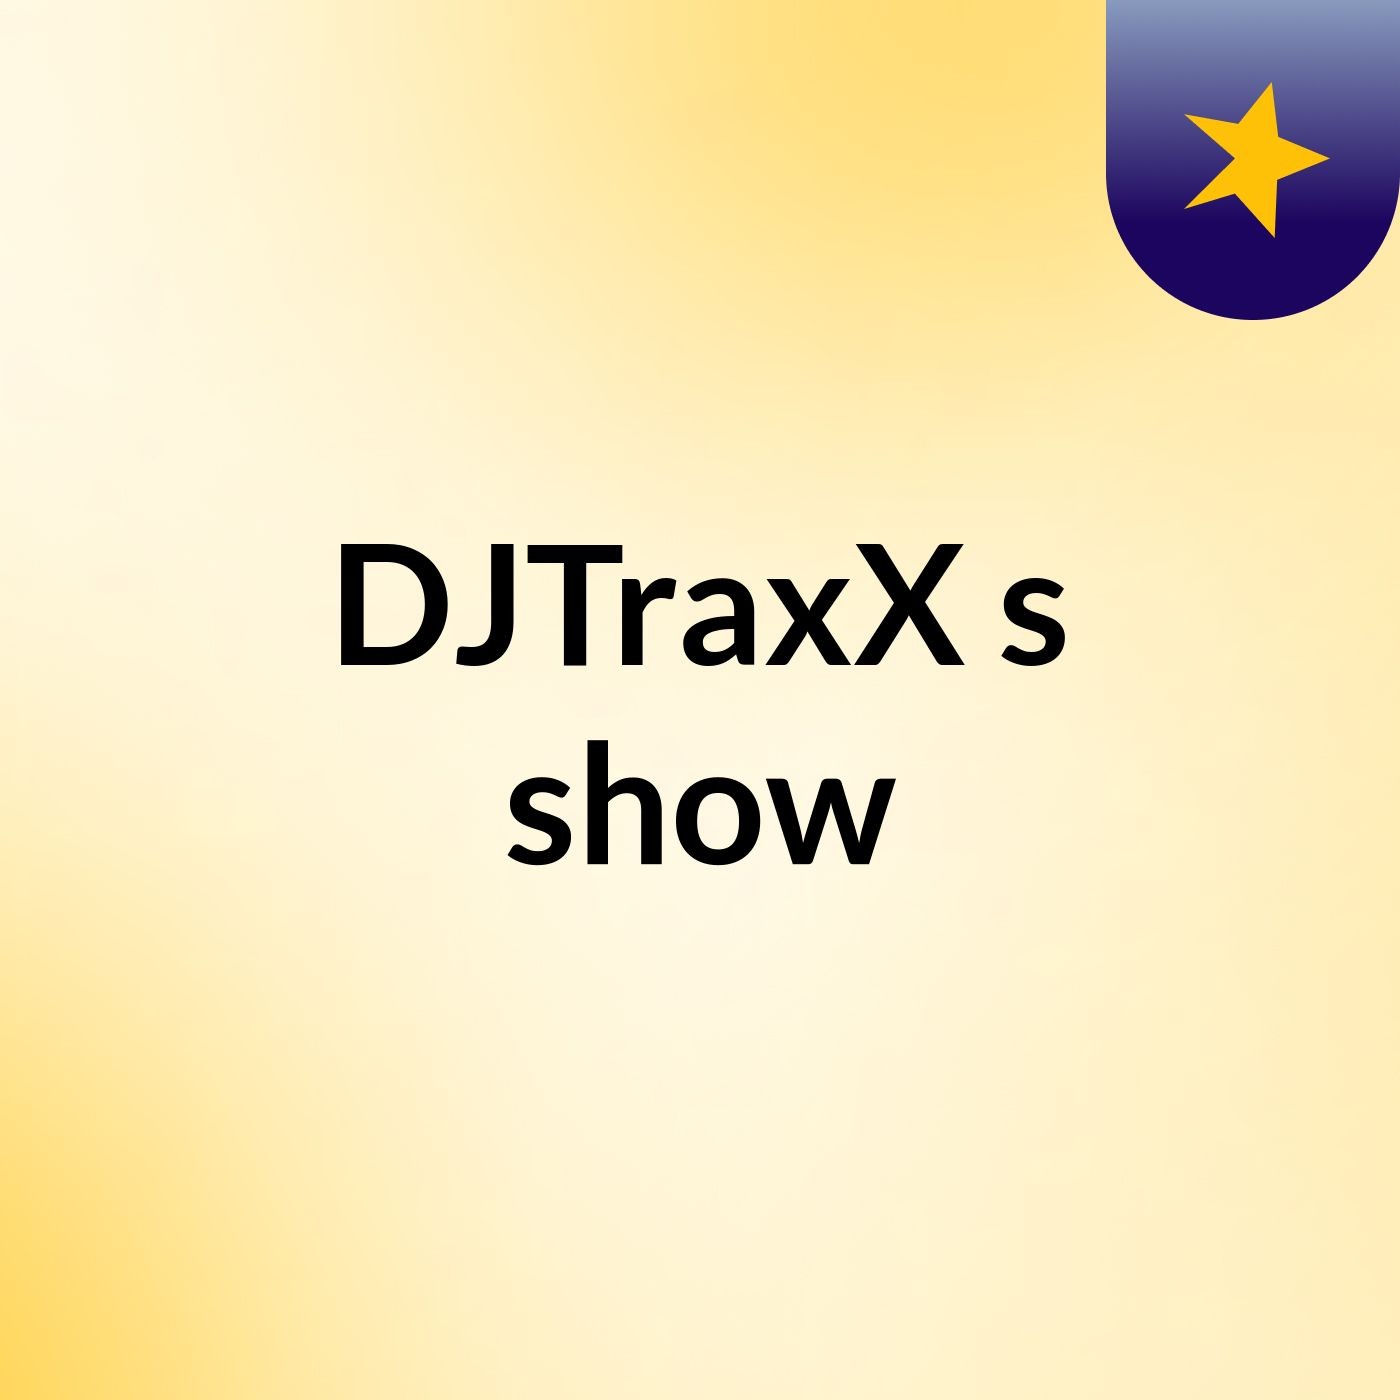 DJTraxX's show